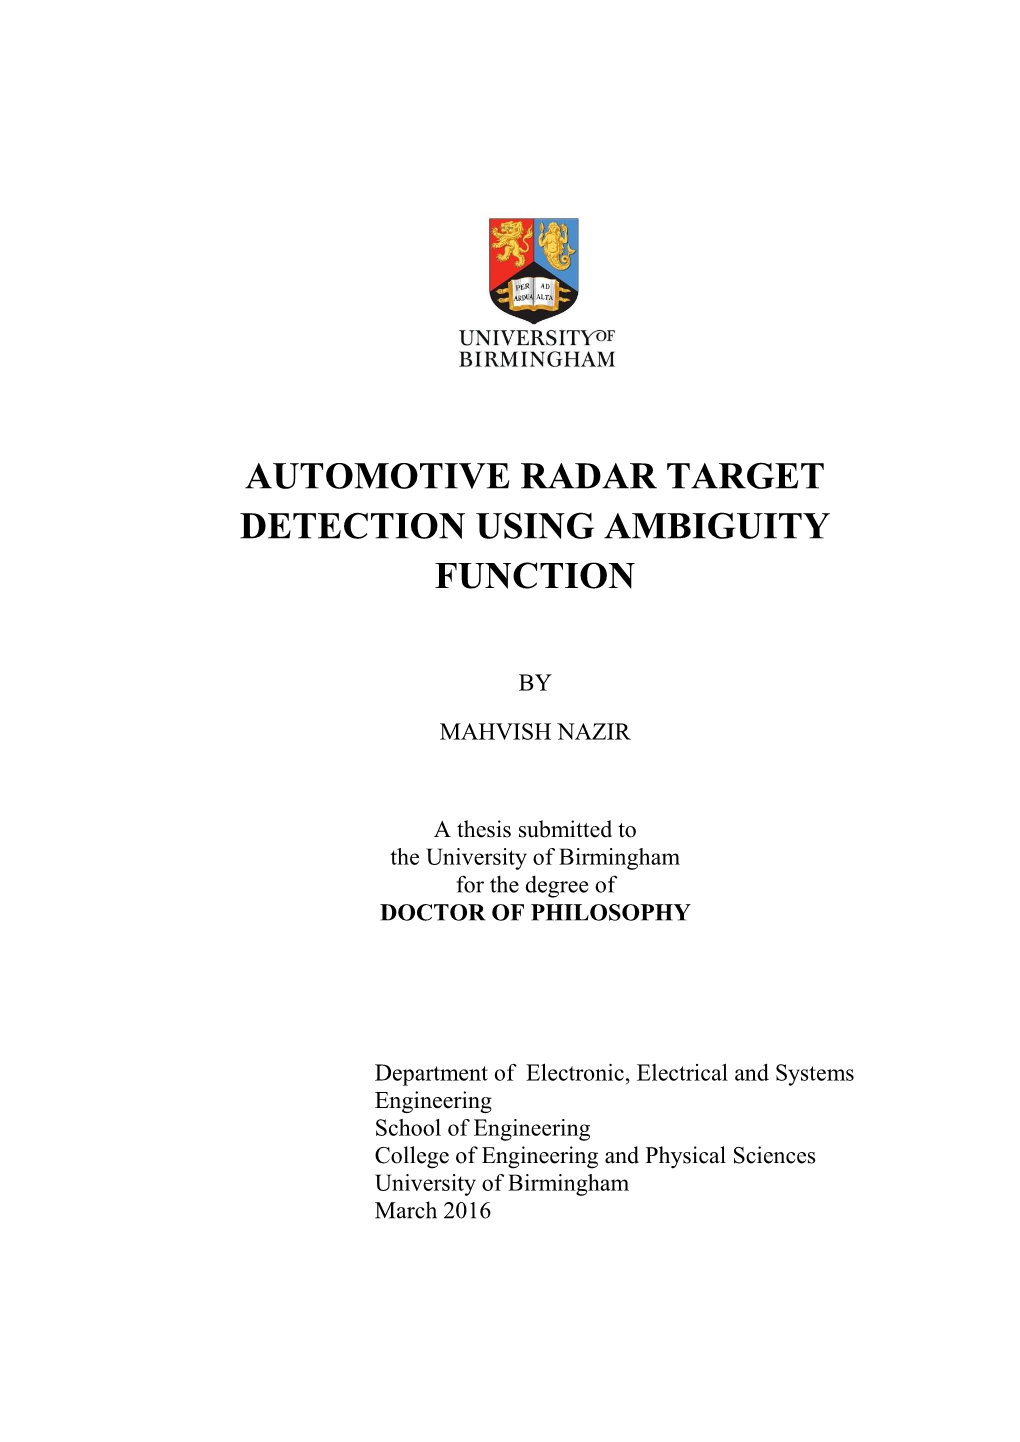 Automotive Radar Target Detection Using Ambiguity Function